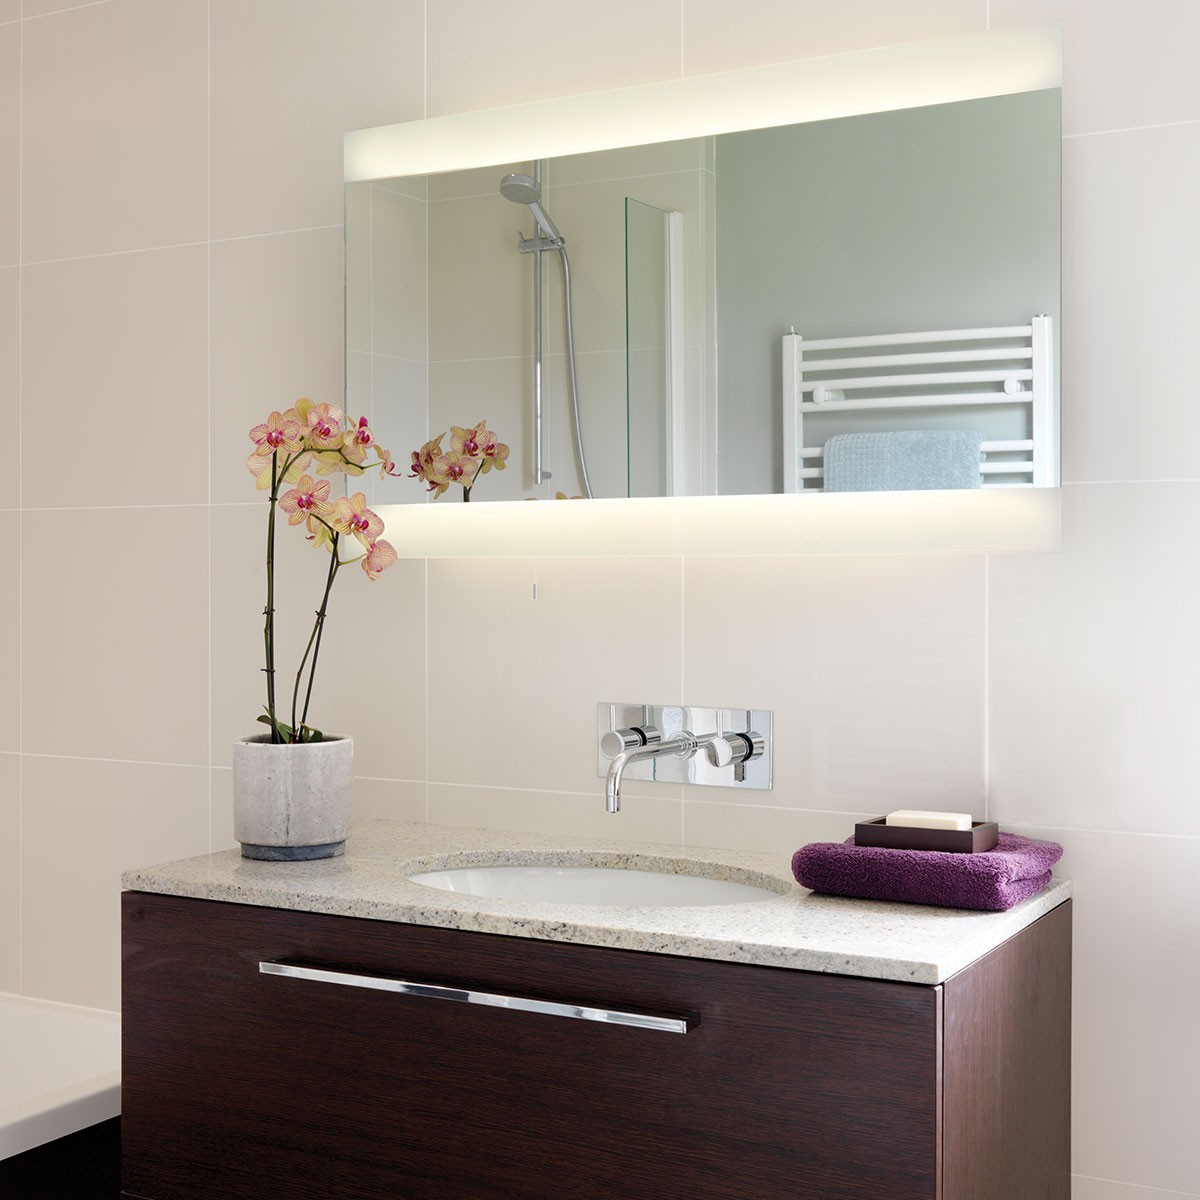 Bathroom Mirror Light
 Astro Fuji Wide 950 Bathroom Mirror Light at UK Electrical